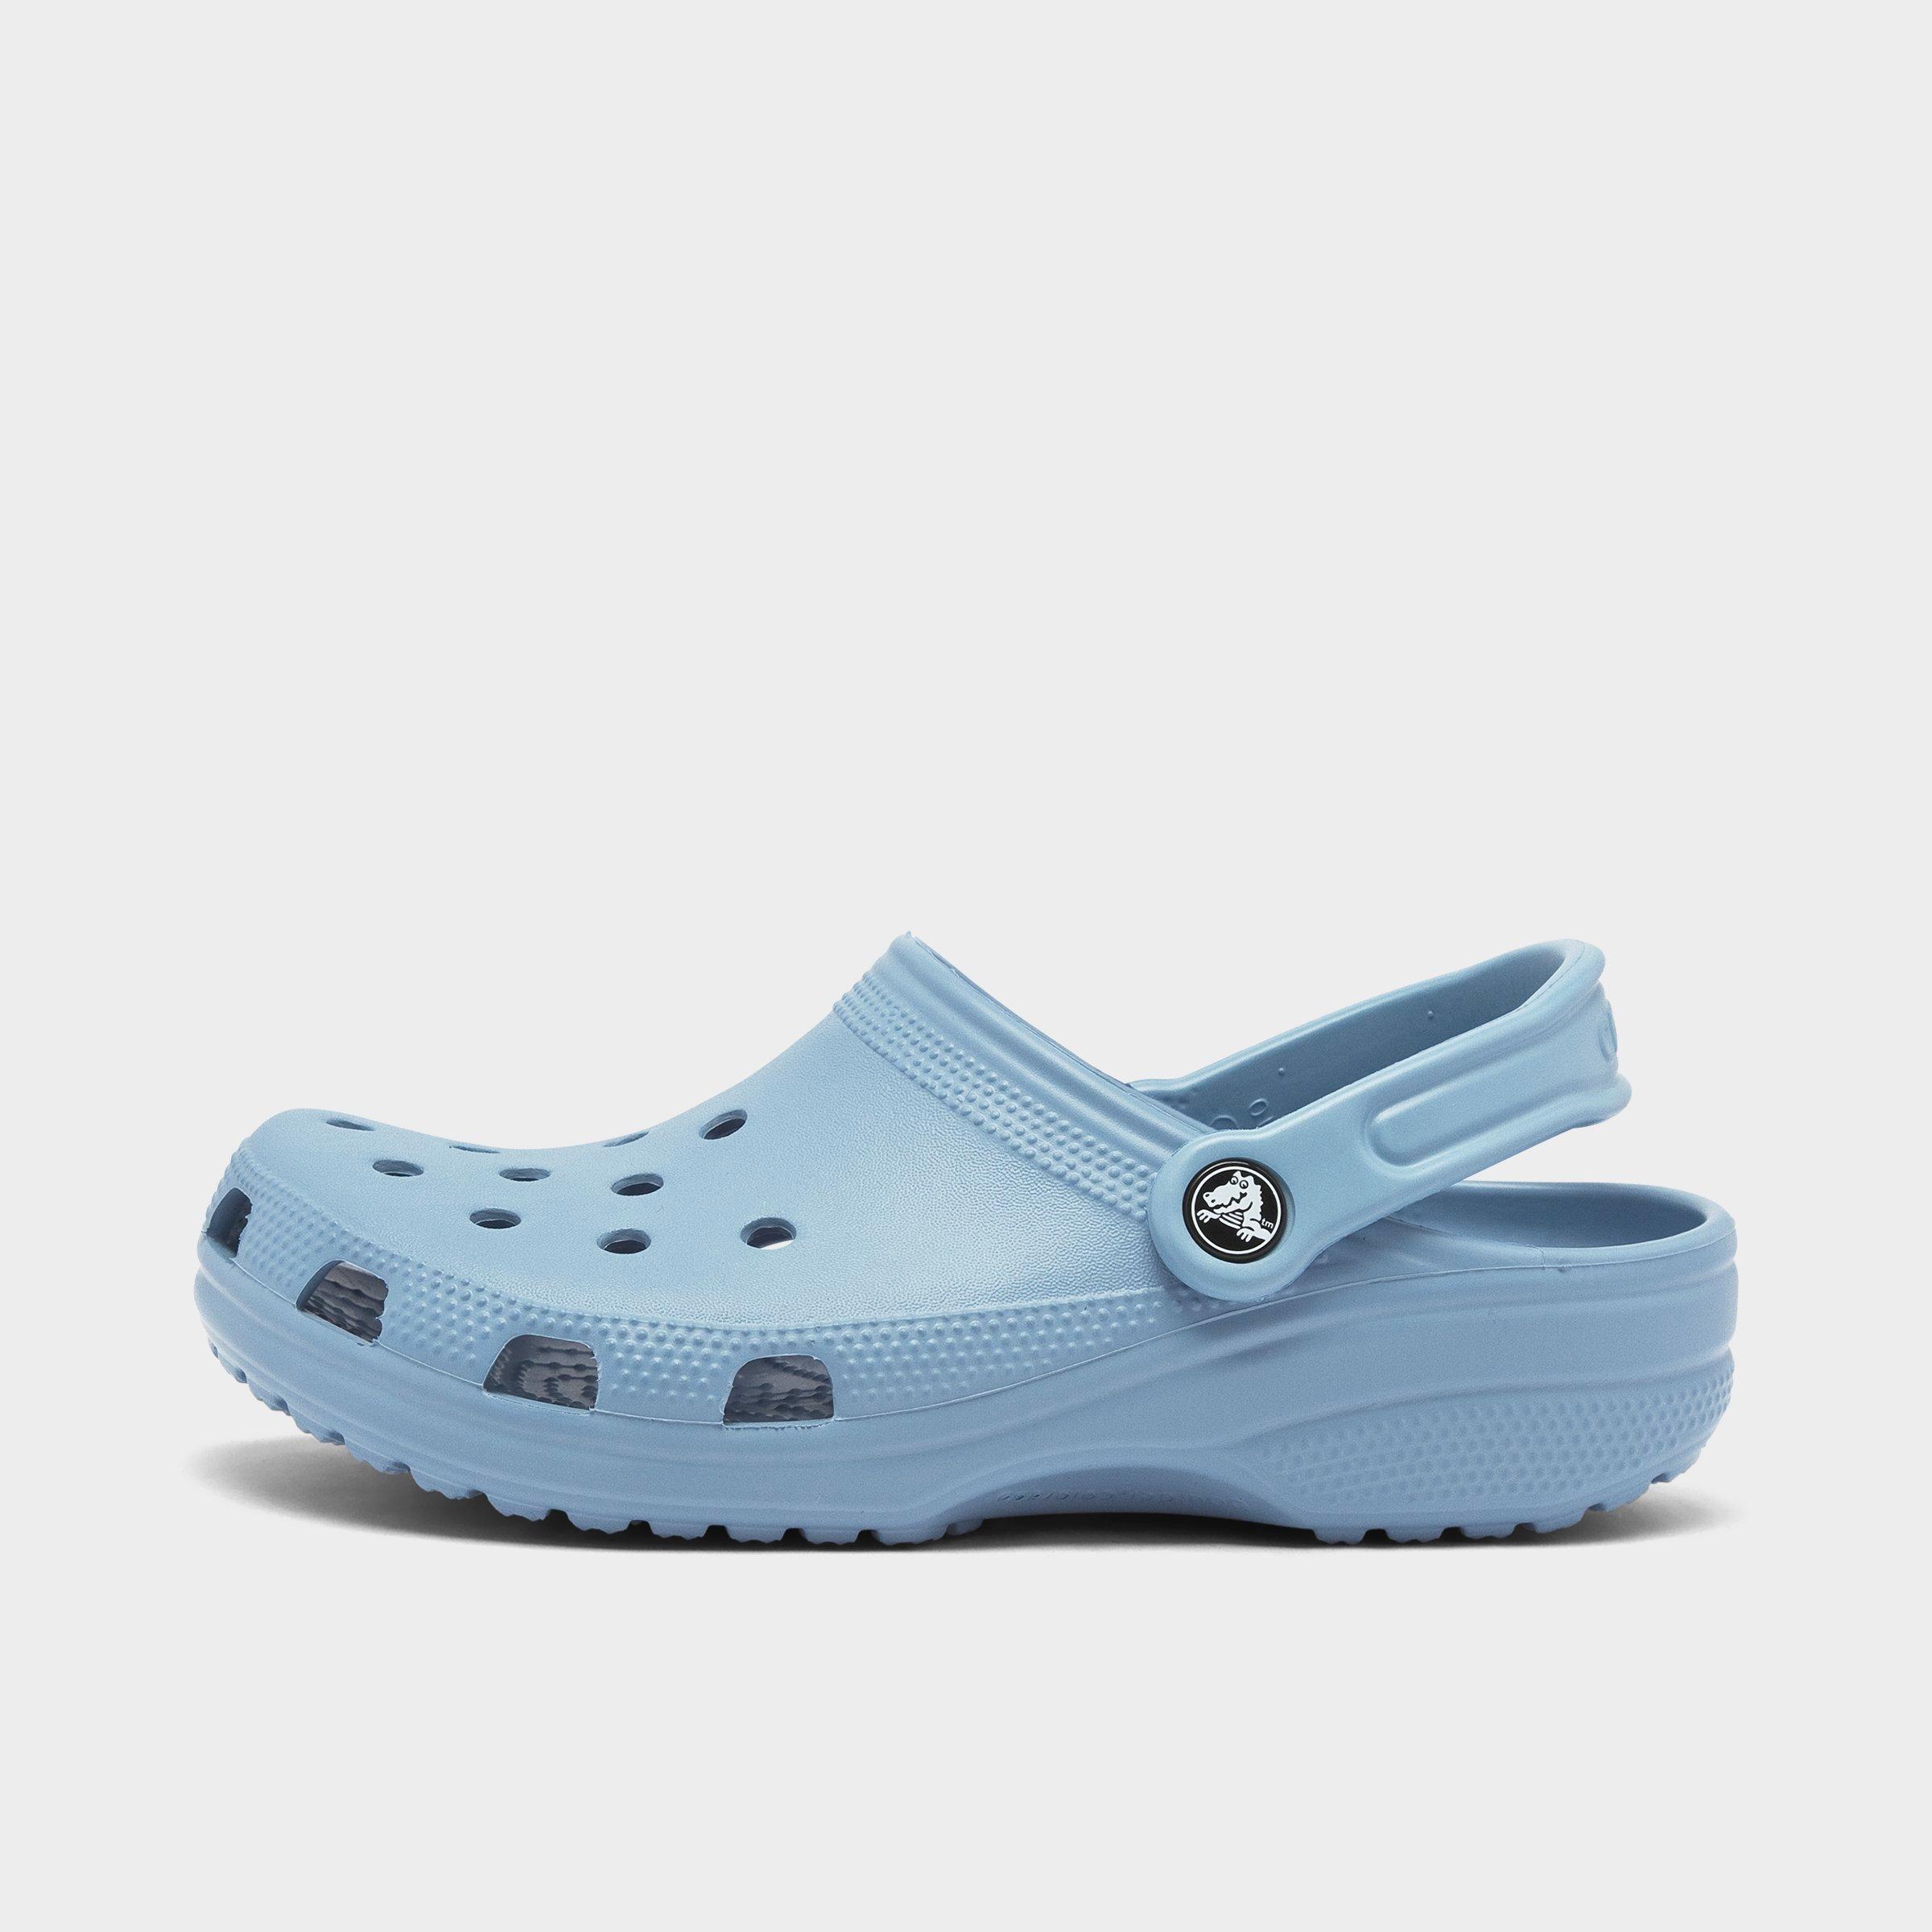 crocs under $20